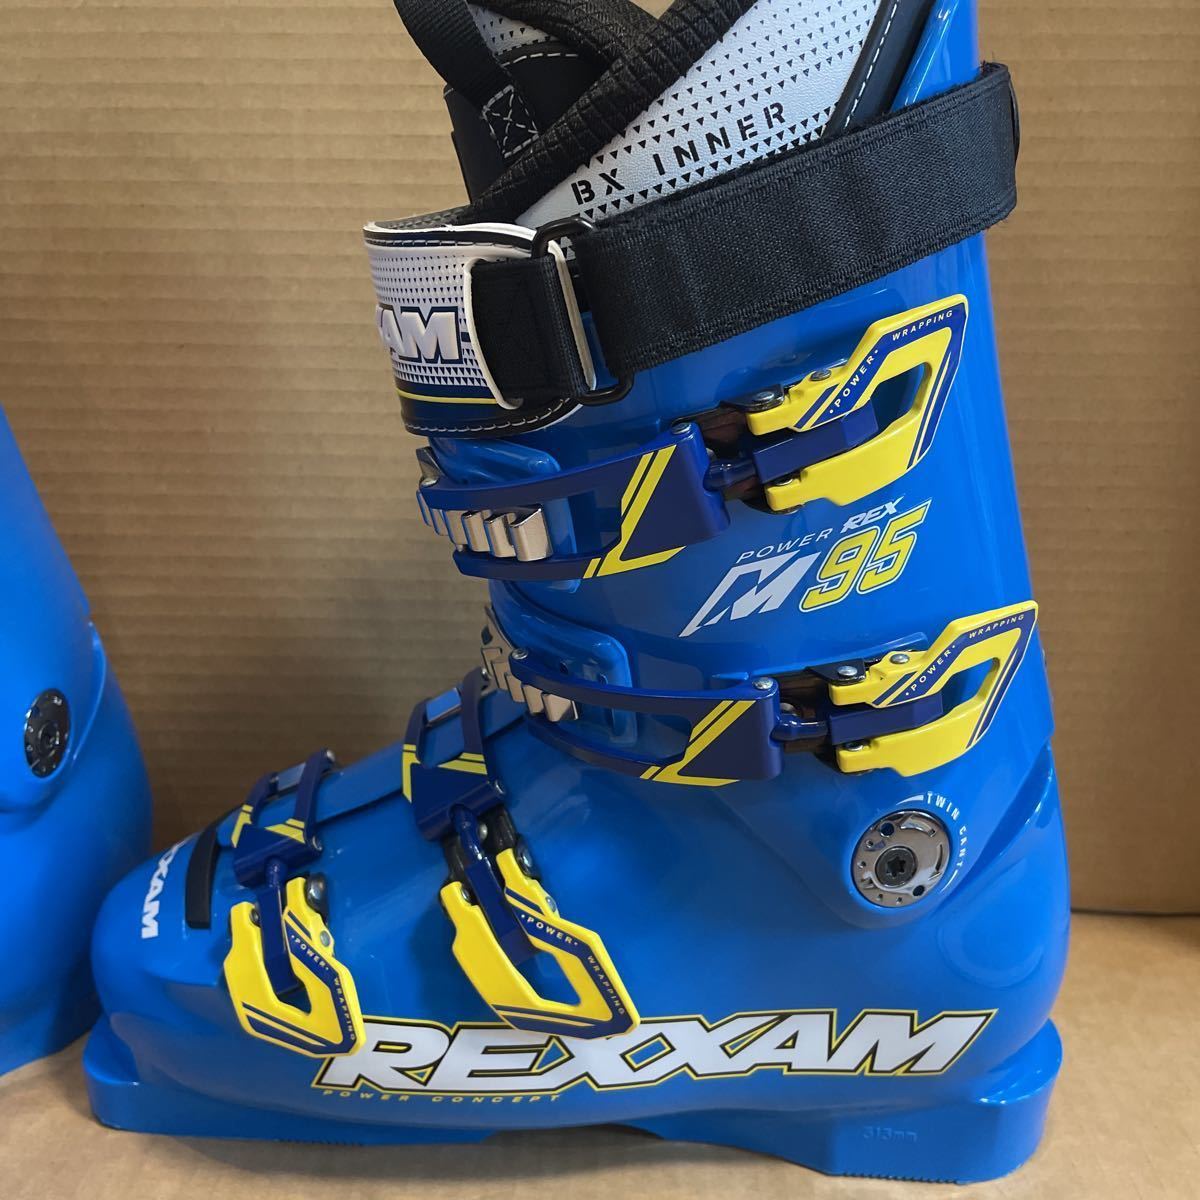 REXXAM Power MAX 93 - スキー